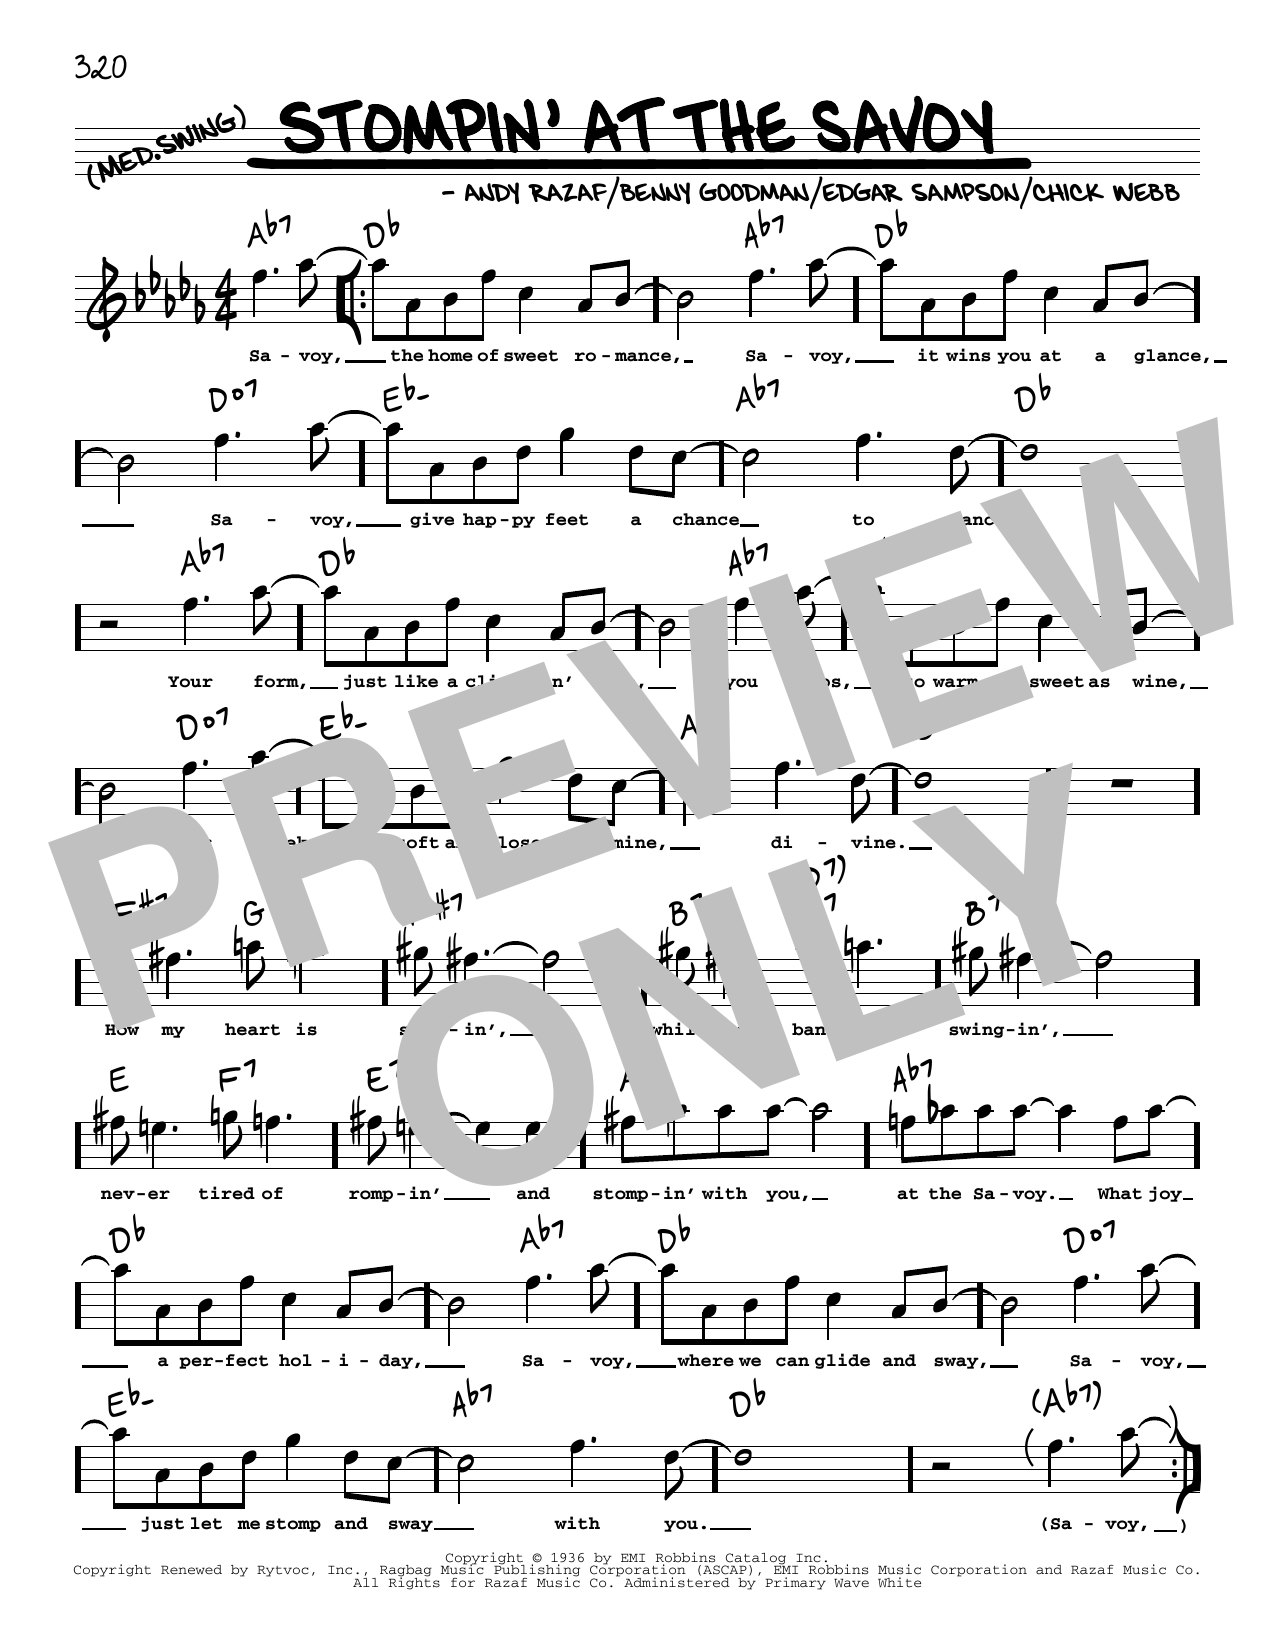 Benny Goodman Stompin' At The Savoy (arr. Robert Rawlins) Sheet Music Notes & Chords for Real Book – Melody, Lyrics & Chords - Download or Print PDF